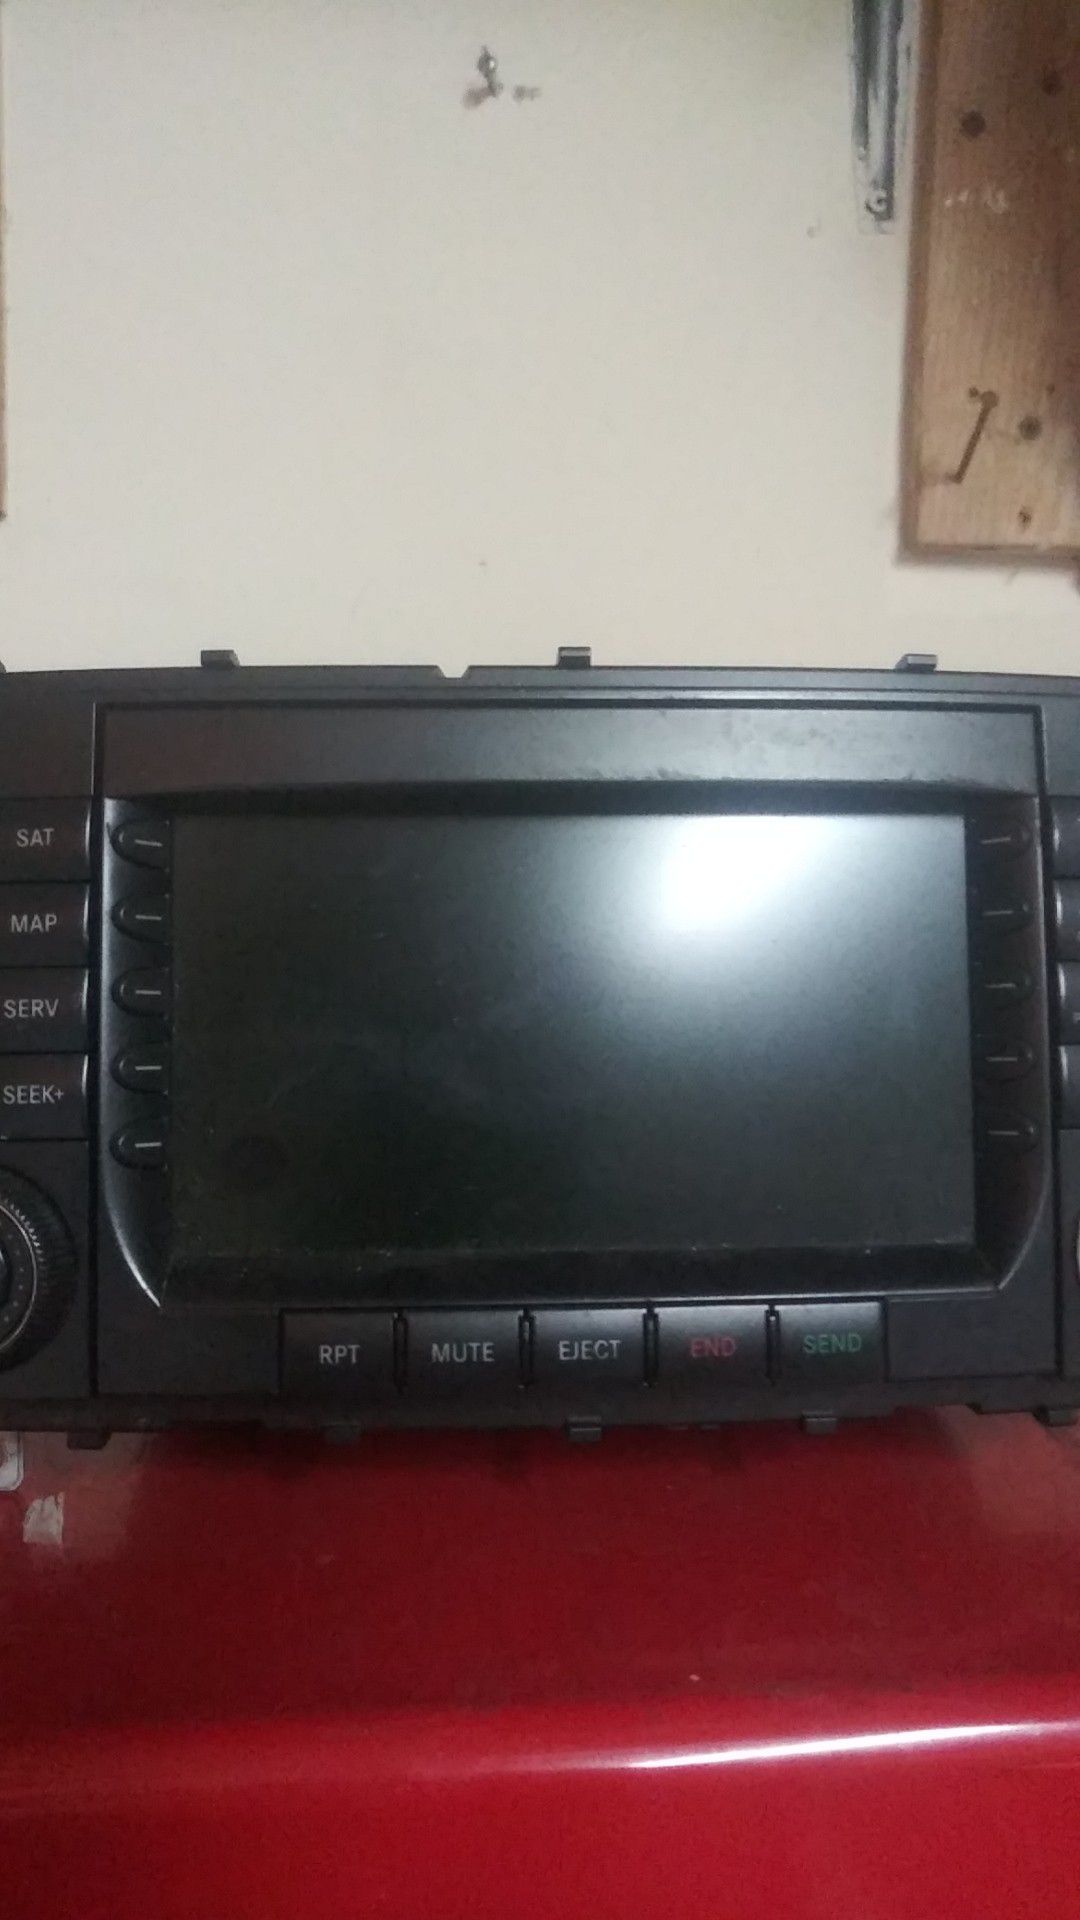 Radio / navigation for 2005 C230